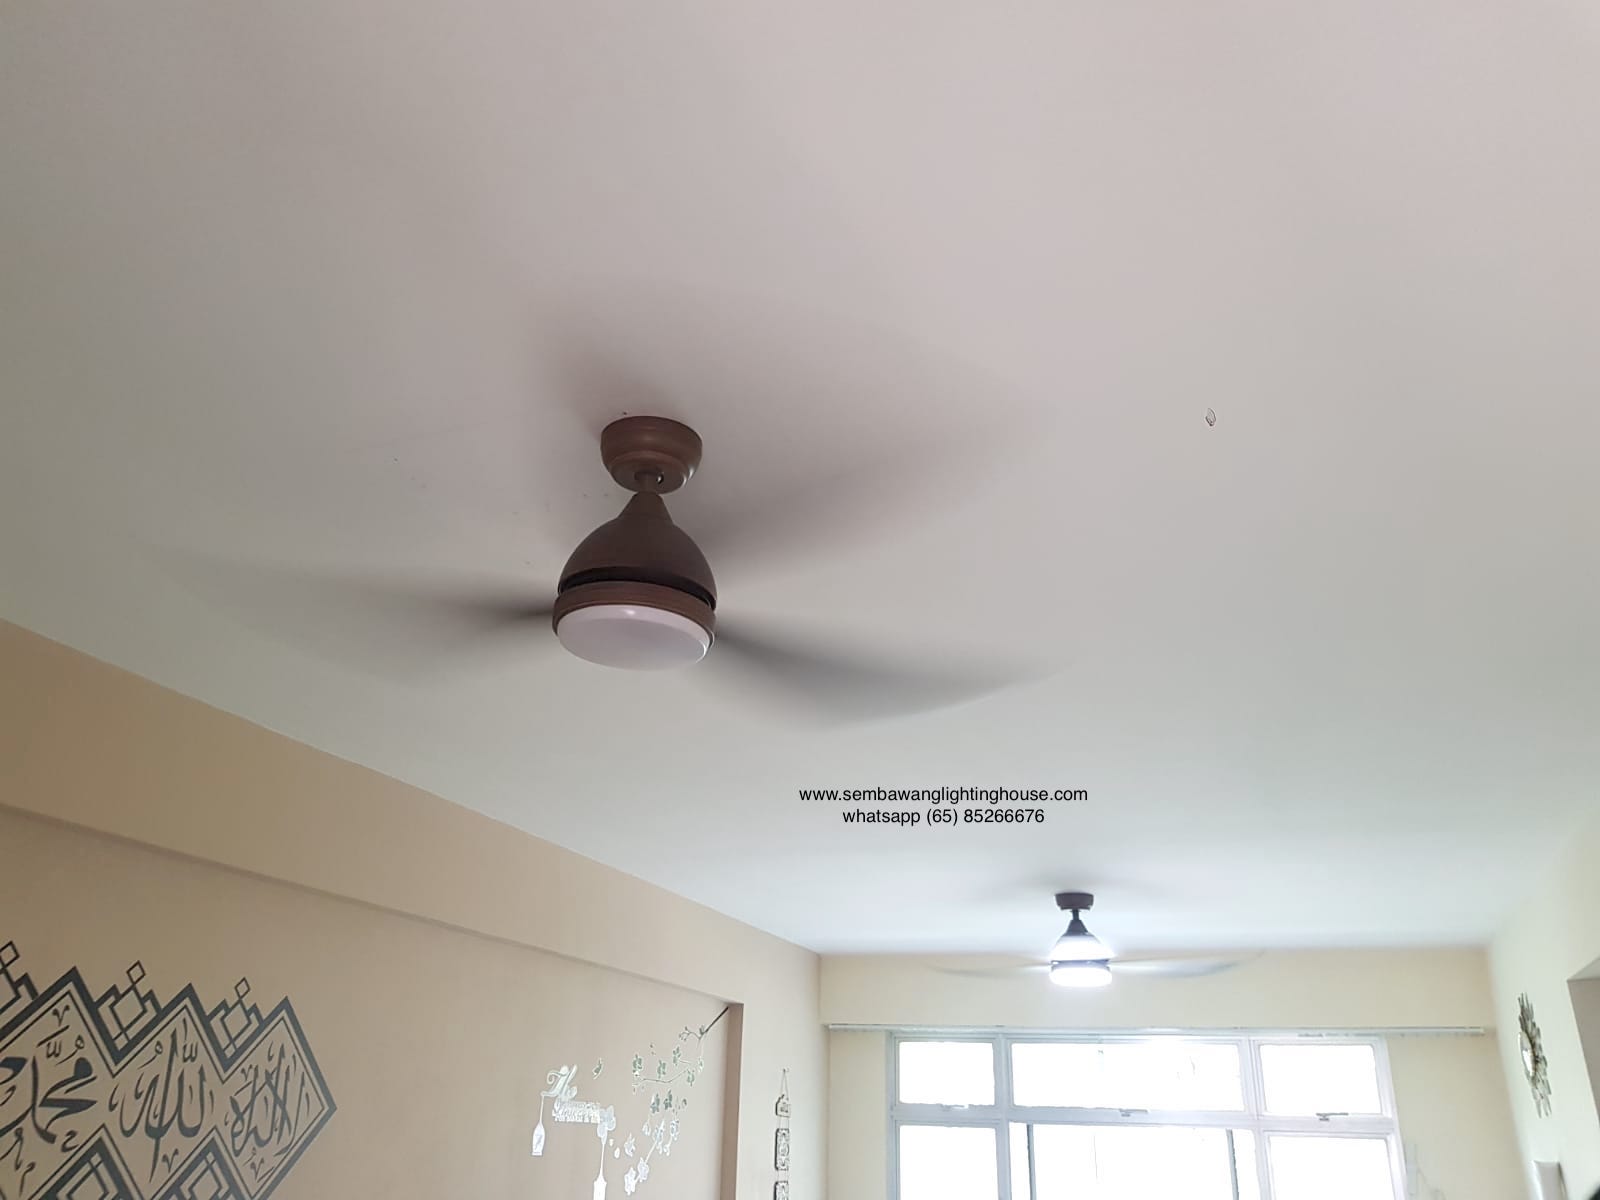 fanco-bstar-wood-ceiling-fan-with-light-sample-05-bto-living-room-sembawang-lighting-house.jpg